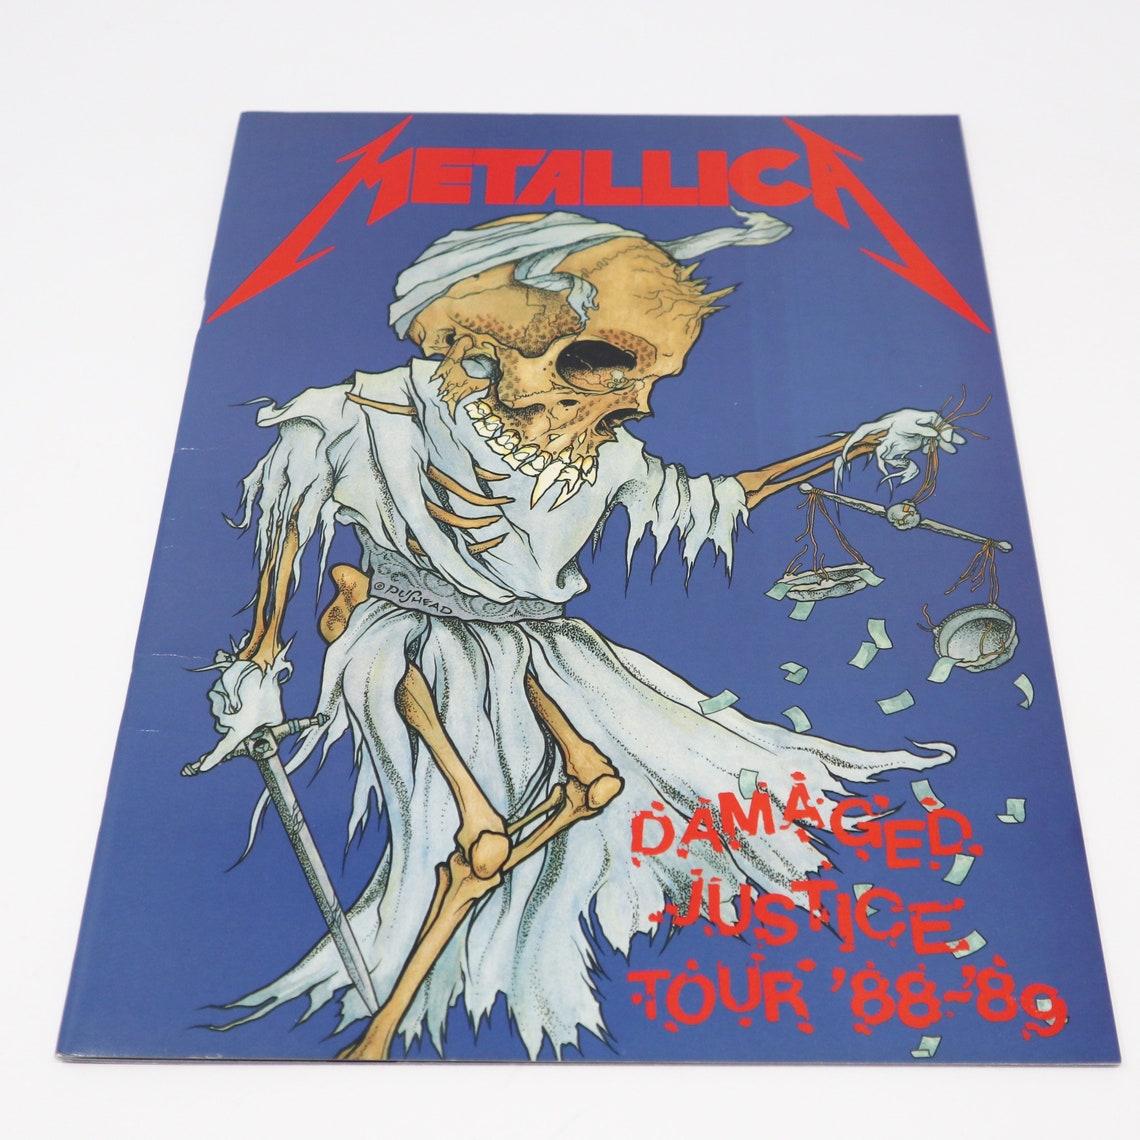 Metallica Damaged Justice Tour '88 '89 Concert - Etsy UK